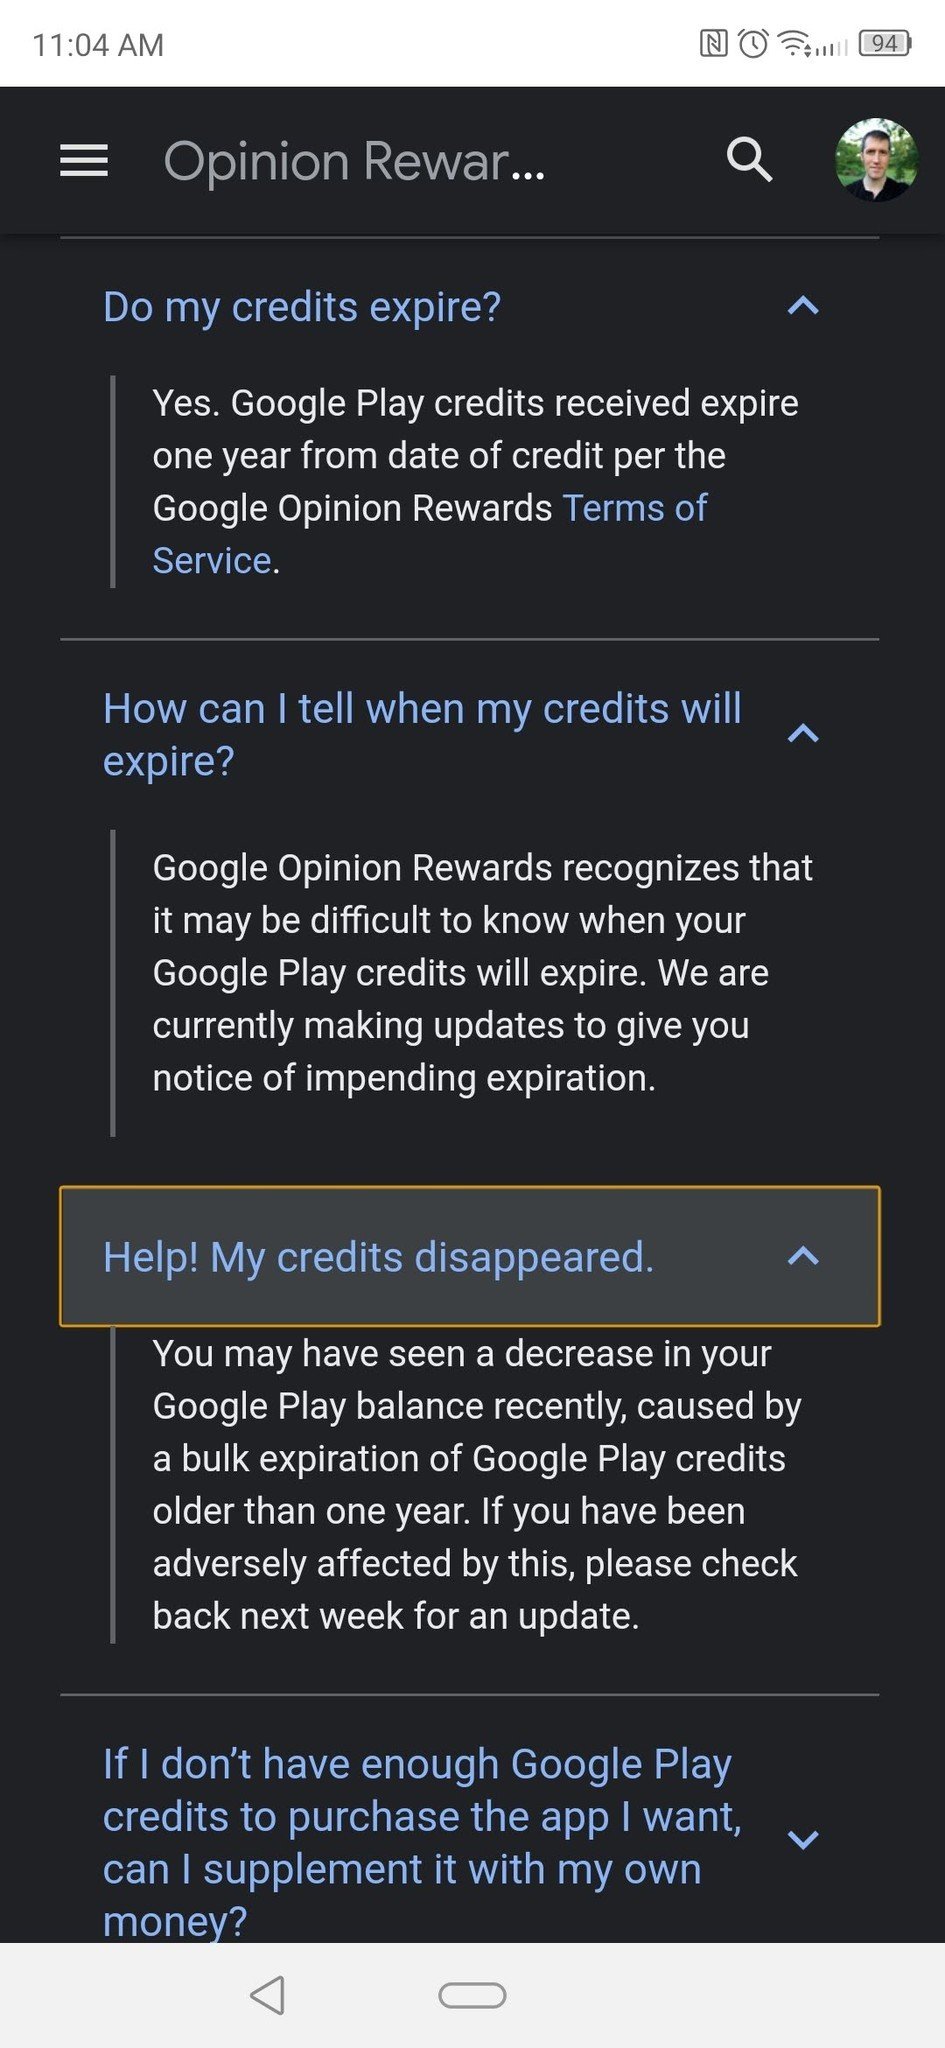 Google Opinion Rewards help page